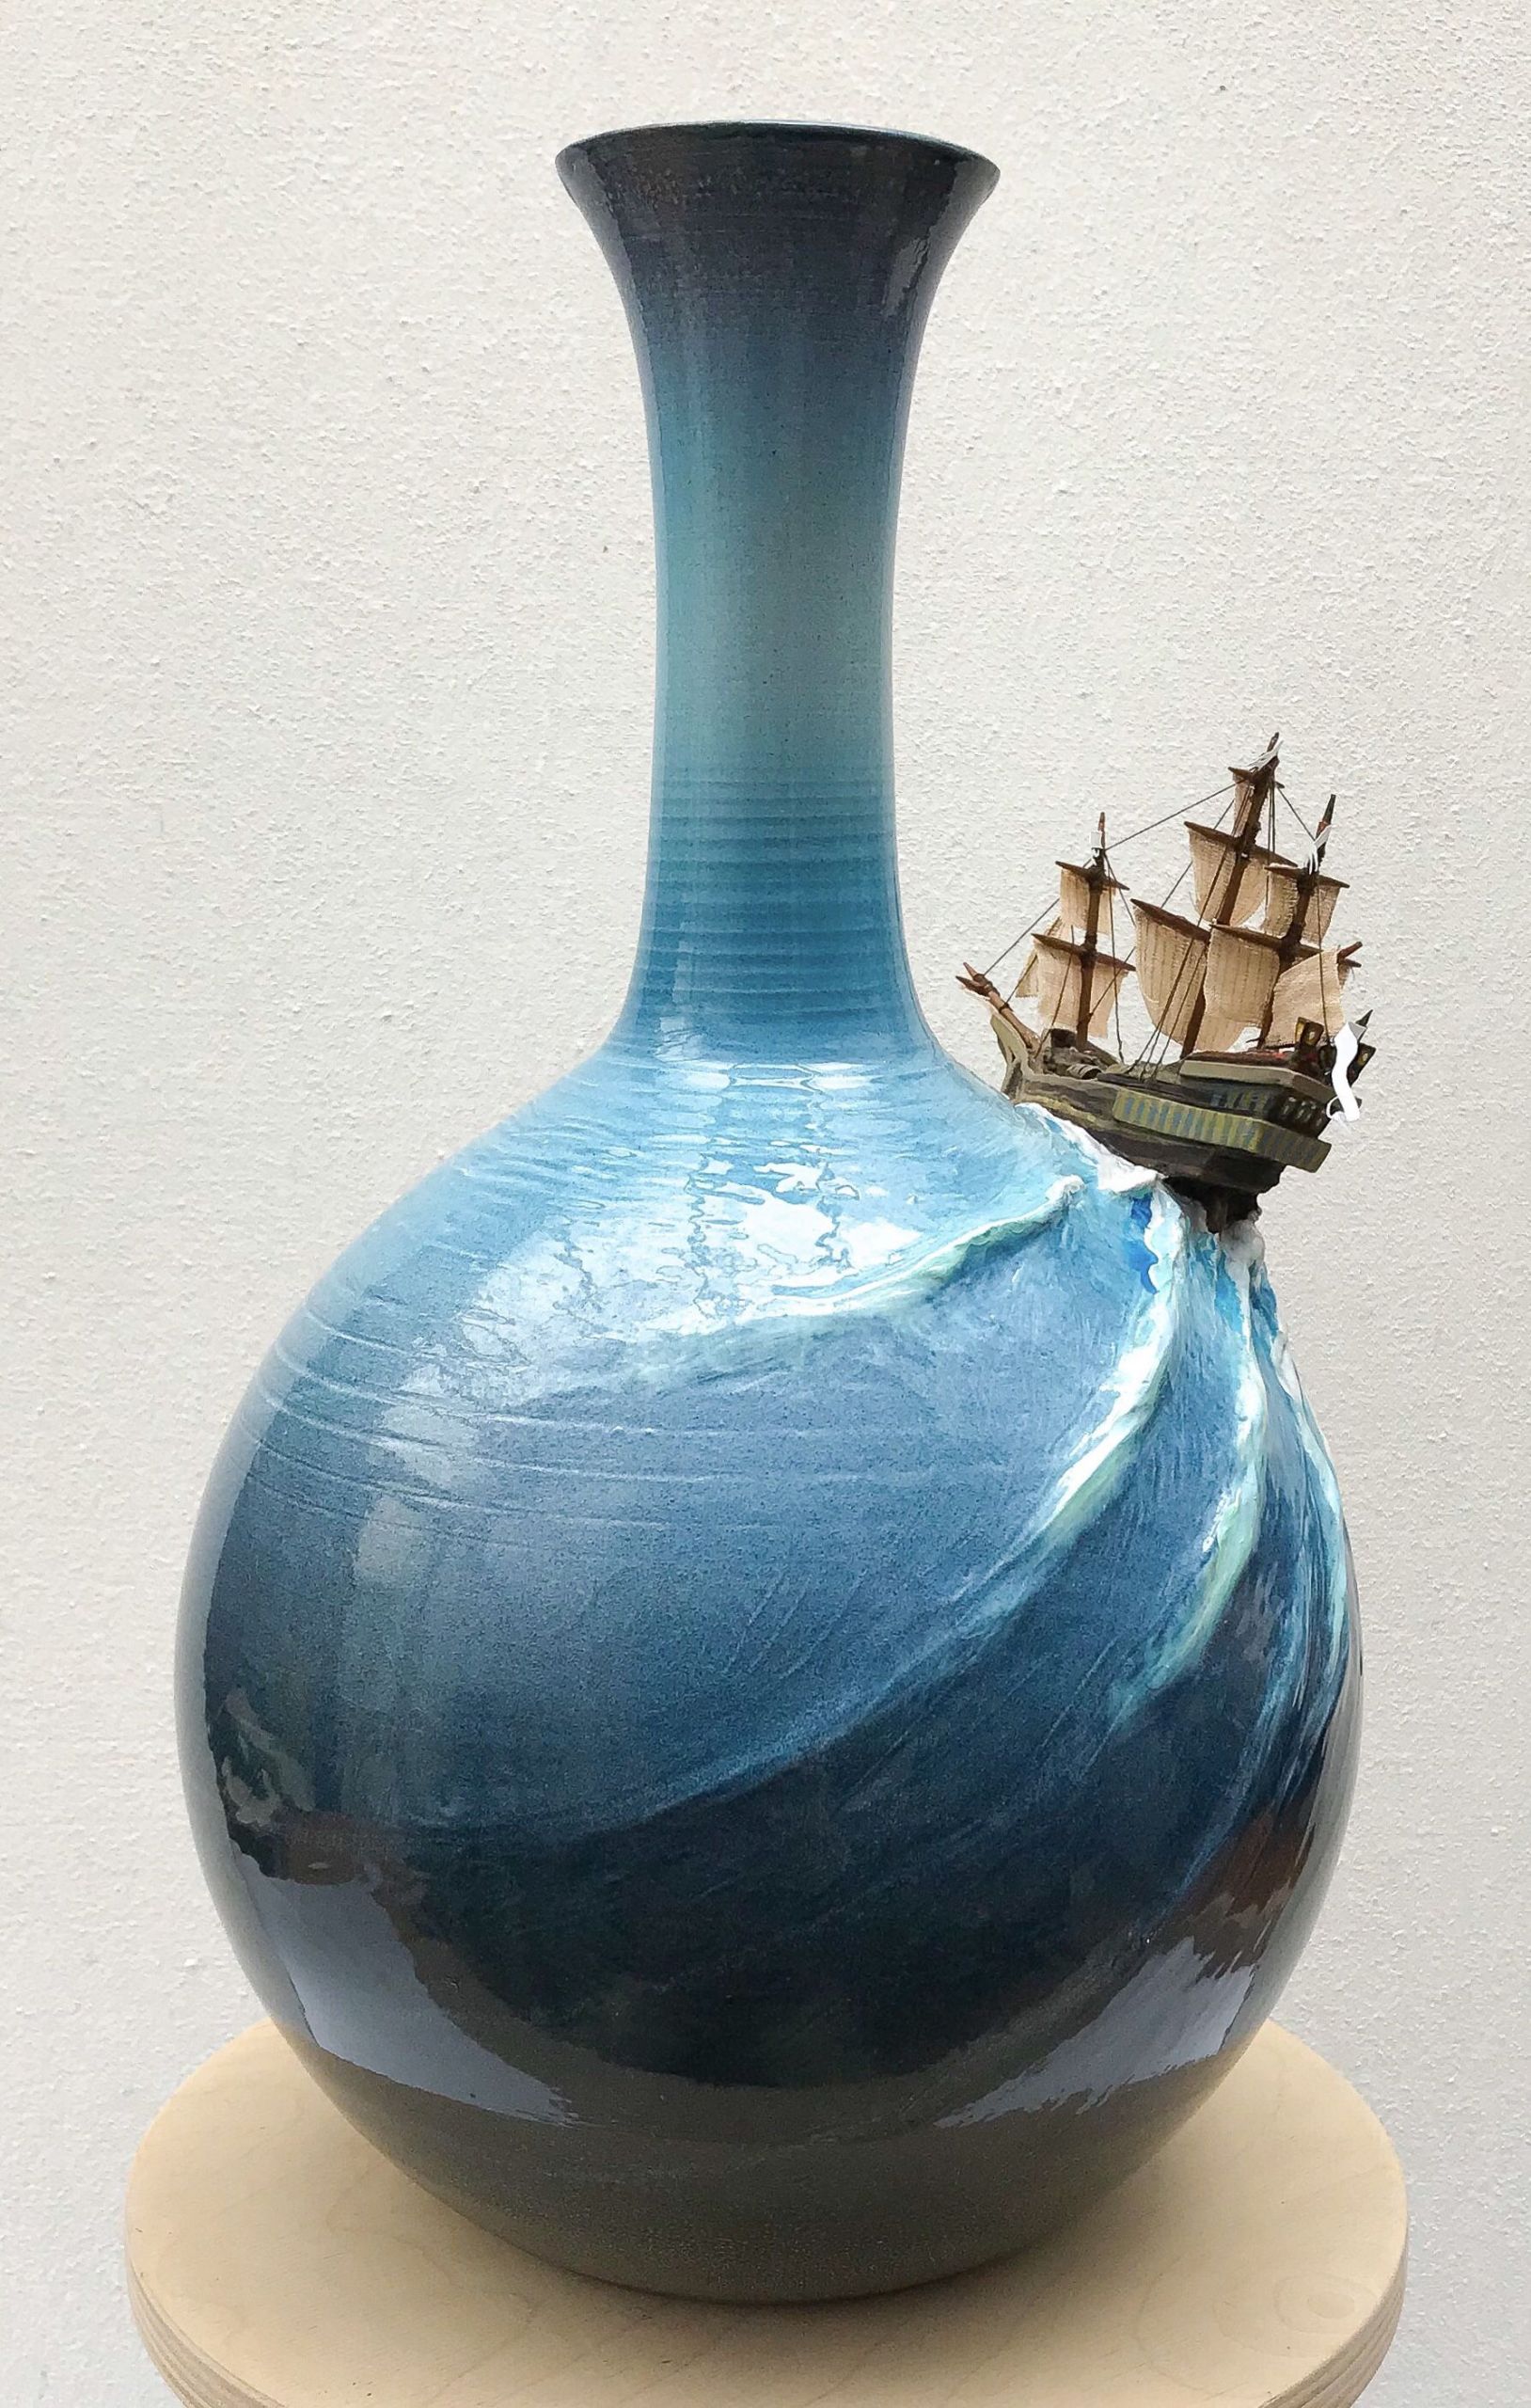 Gartendeko Keramik Elegant Pin by Arts In Clay On Fantasy Ceramic Art In 2019